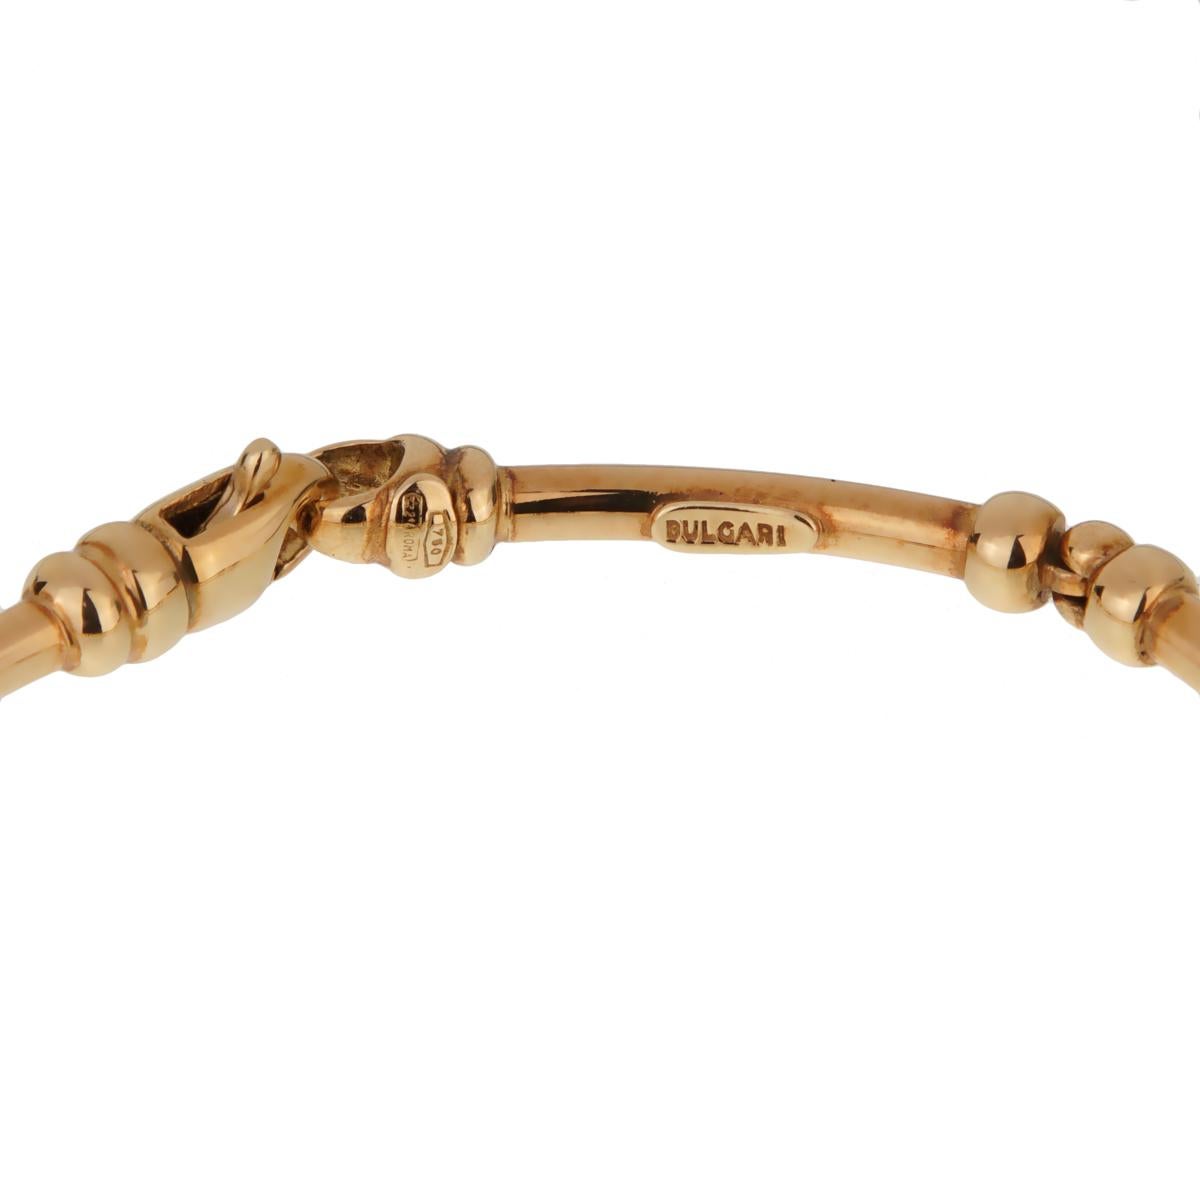 A chic vintage Bulgari bracelet showcasing a tubular design in shimmering 18k yellow gold. Circa 1990s.

Length 7